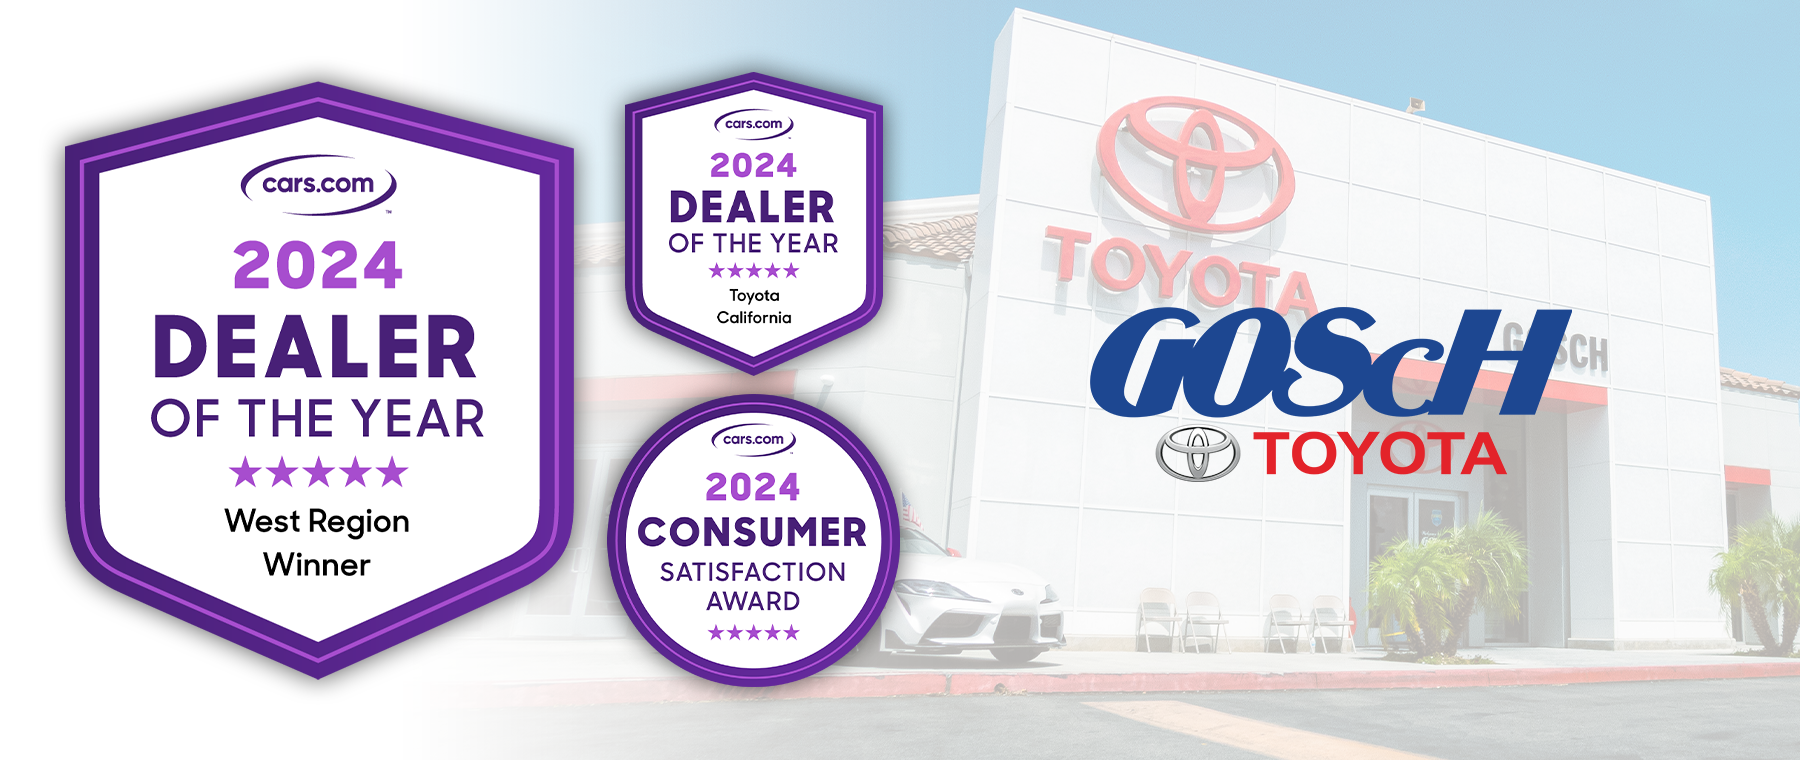 Gosch Toyota Dealer of the Year 2024